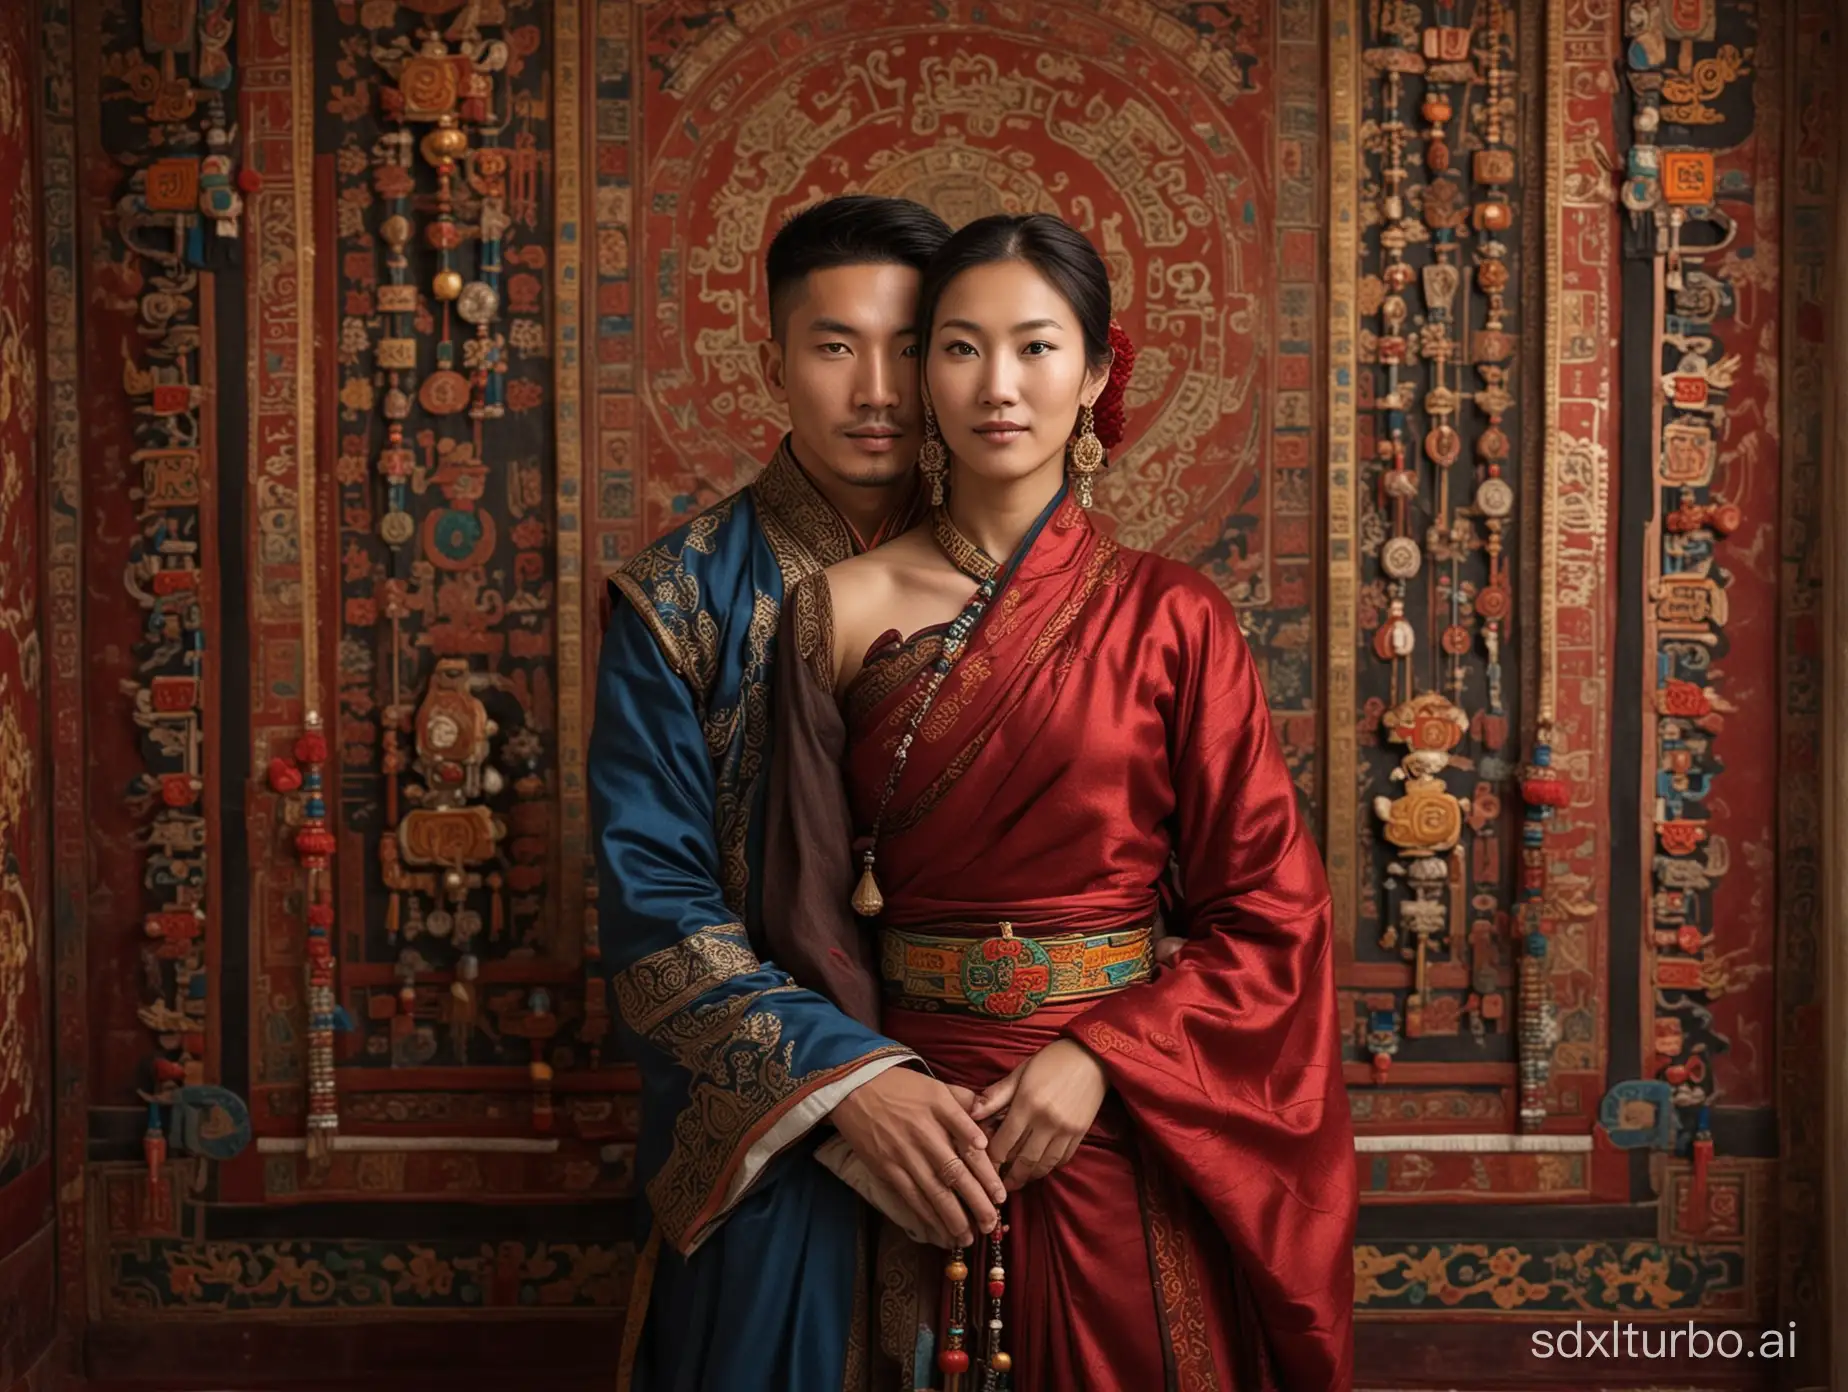 Tibetan-style couple portrait, full body
Background: Tibetan decorations
Poses: Intimate